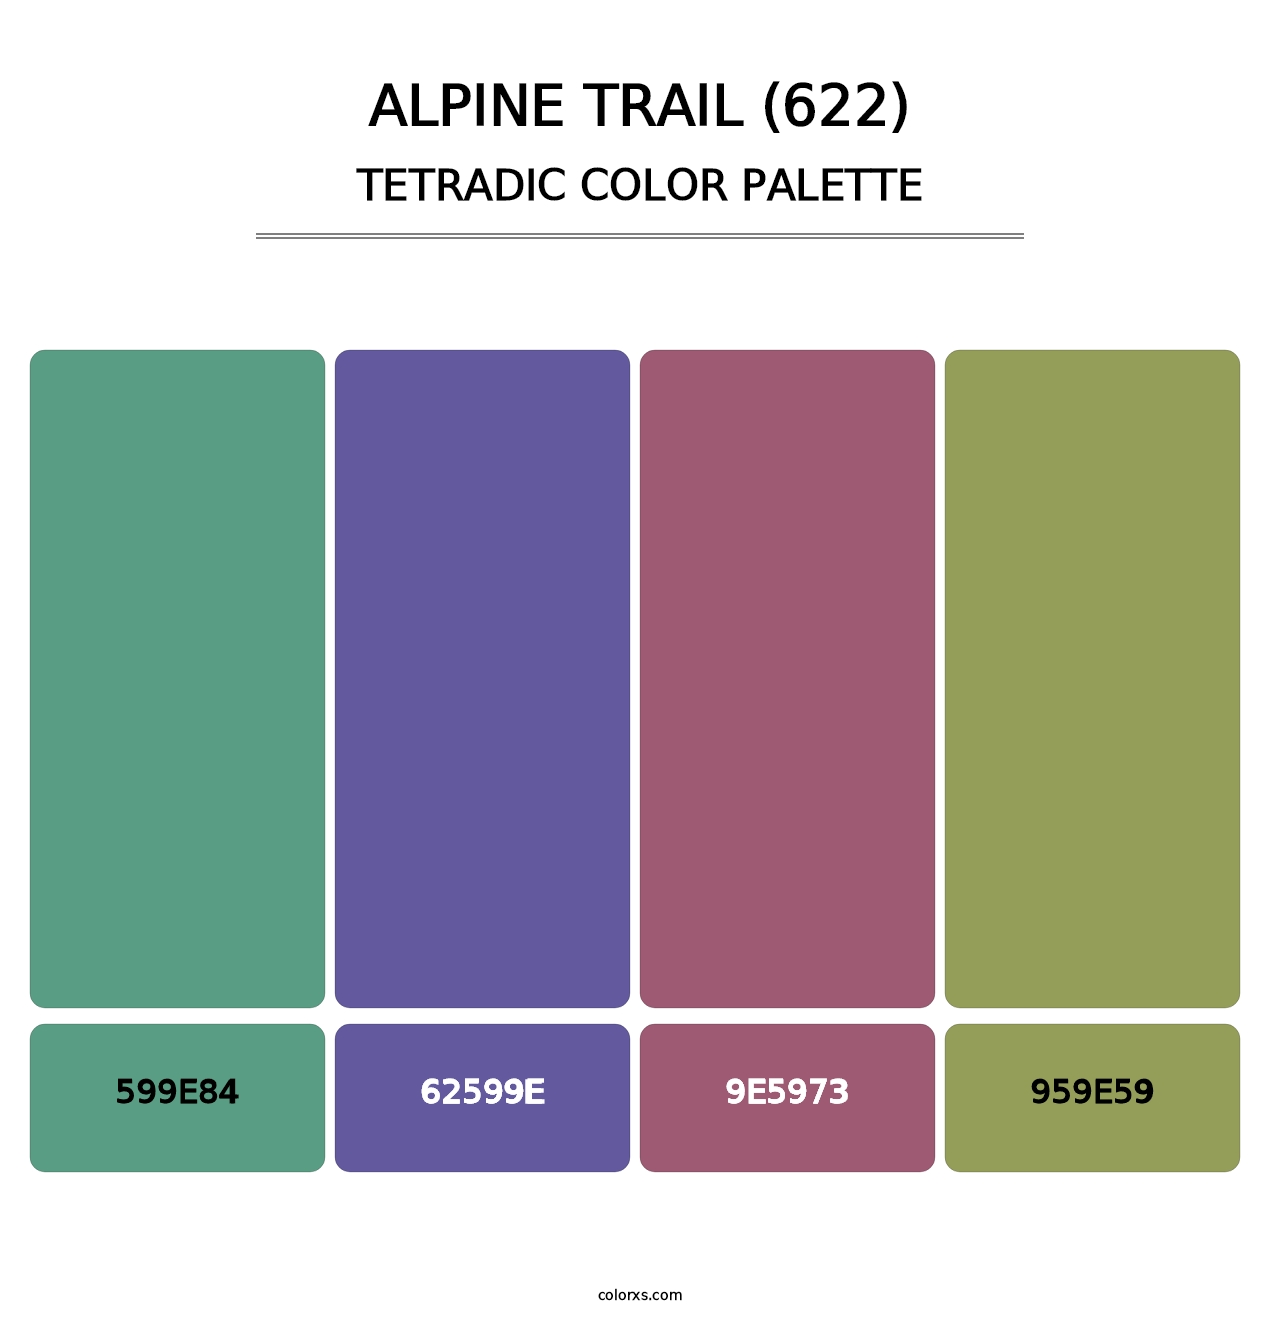 Alpine Trail (622) - Tetradic Color Palette